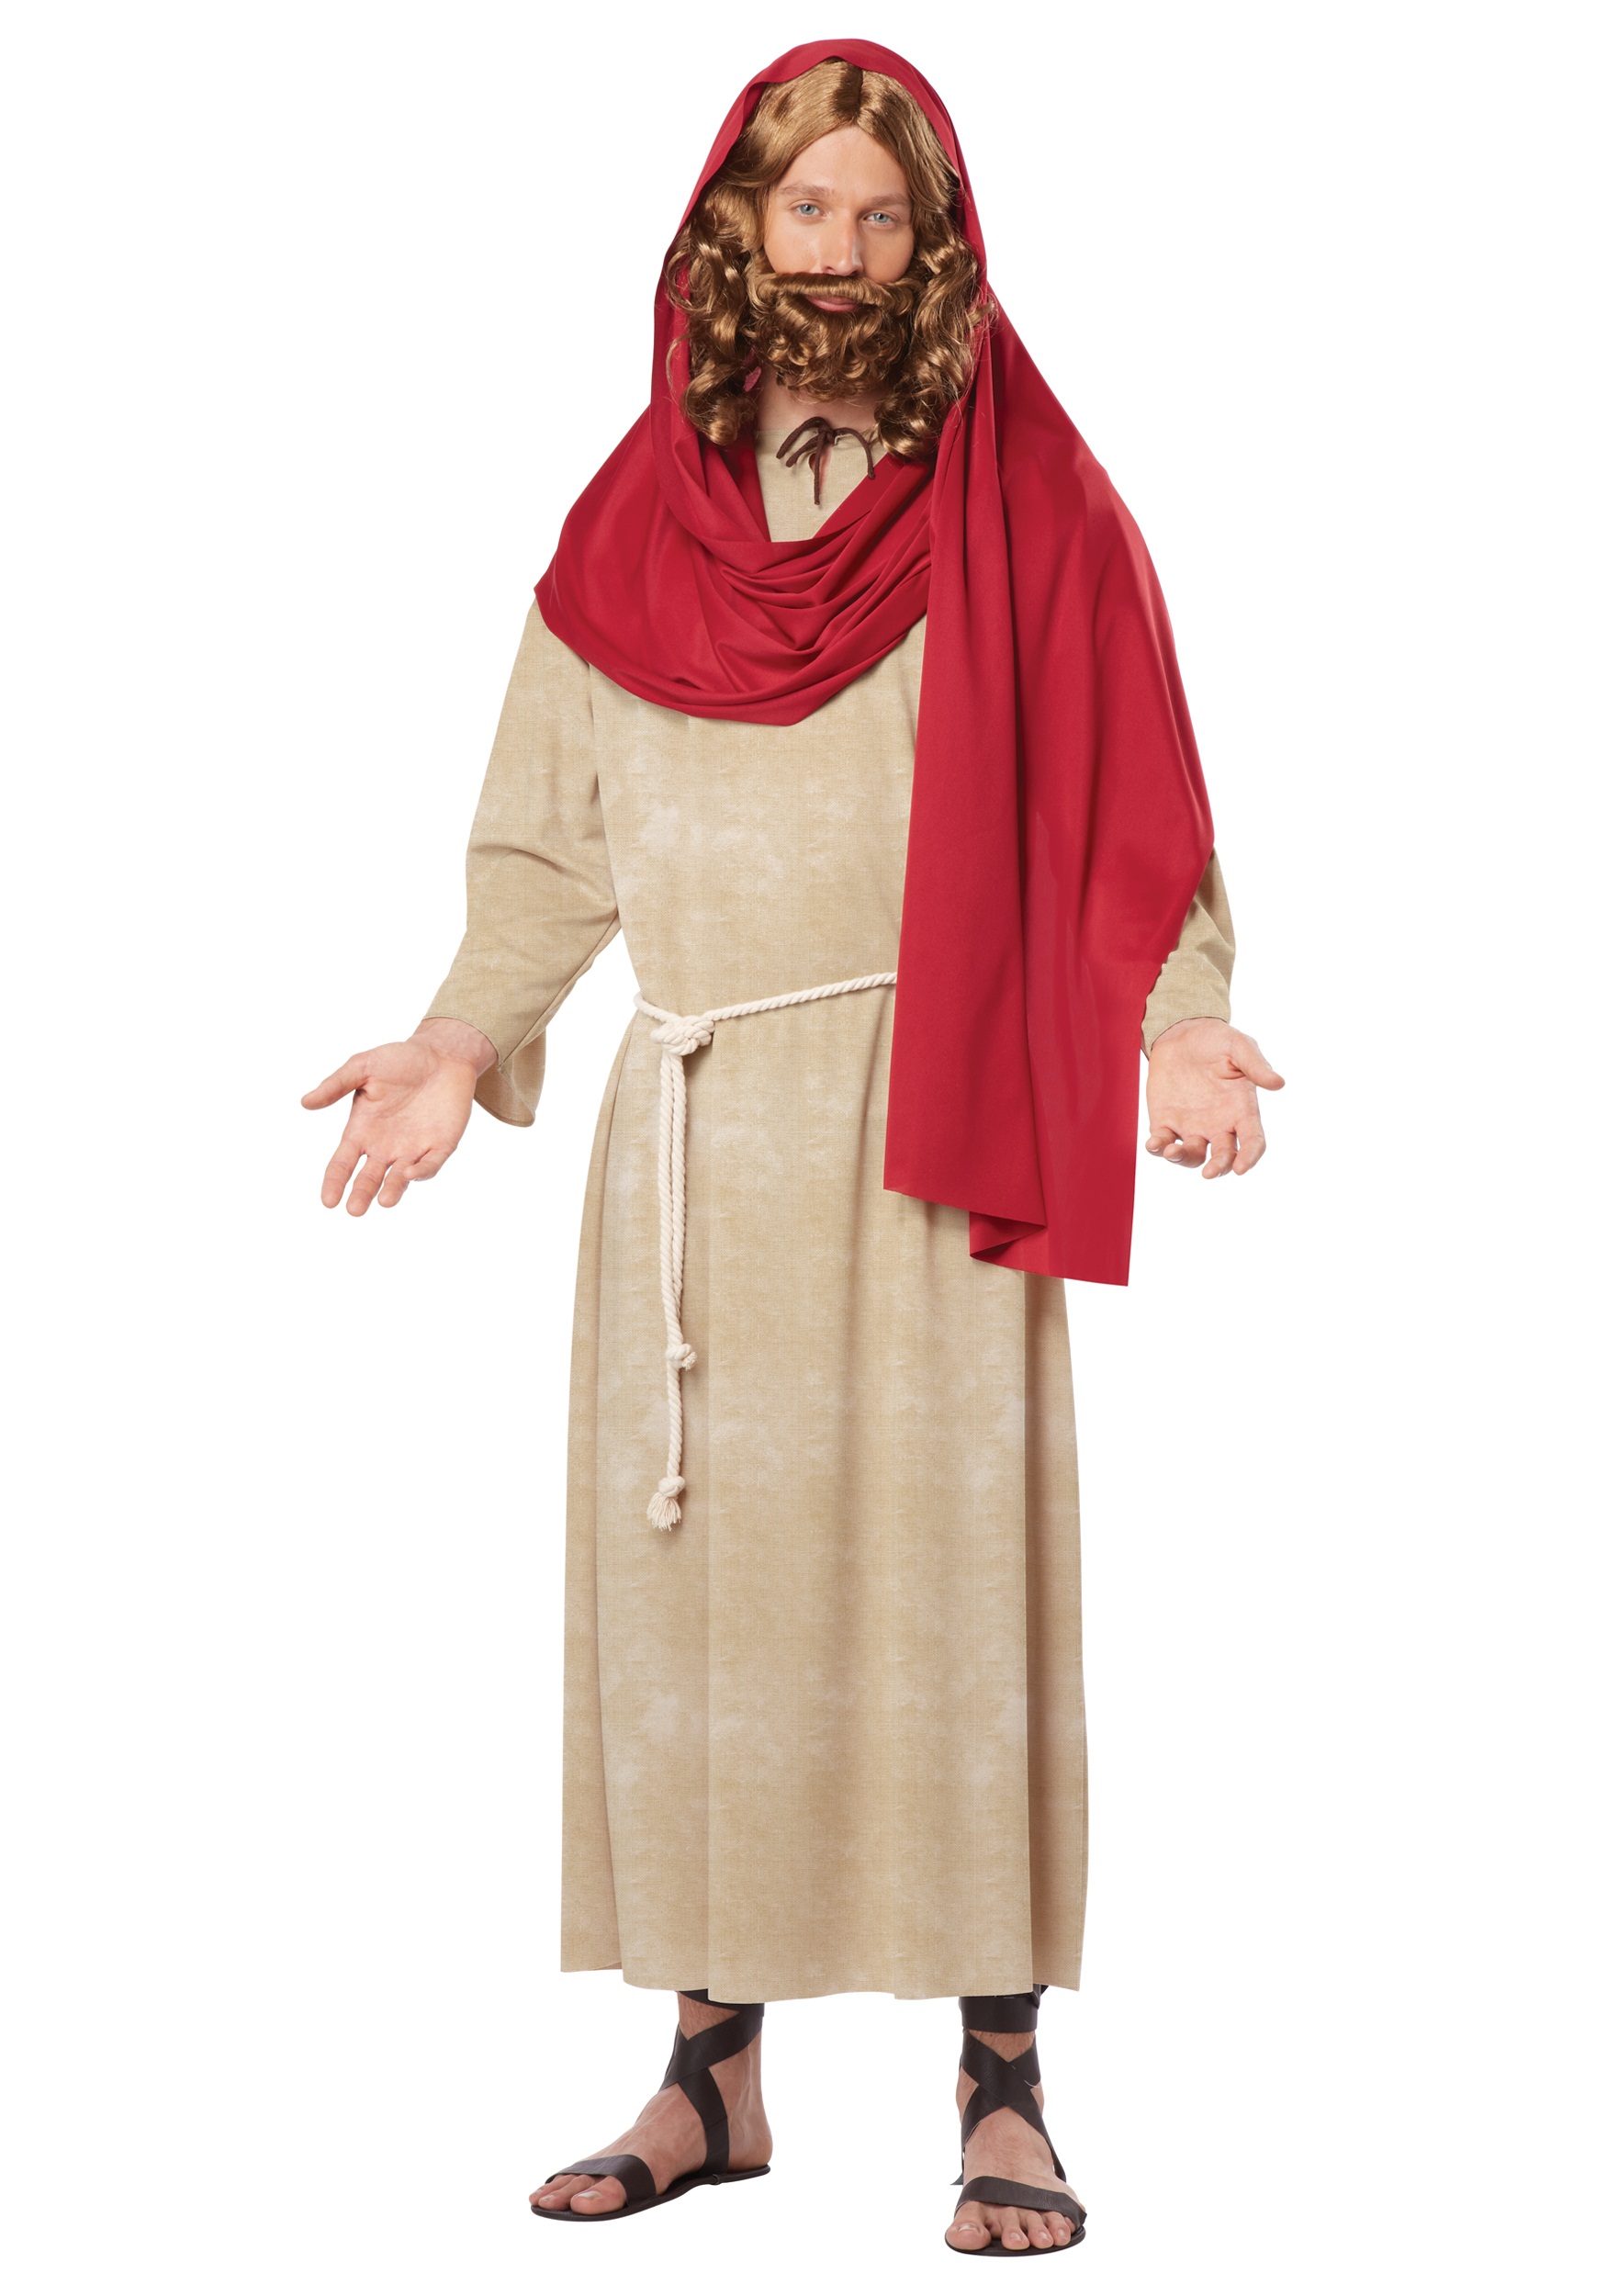 Jesus Christ Adult Costume